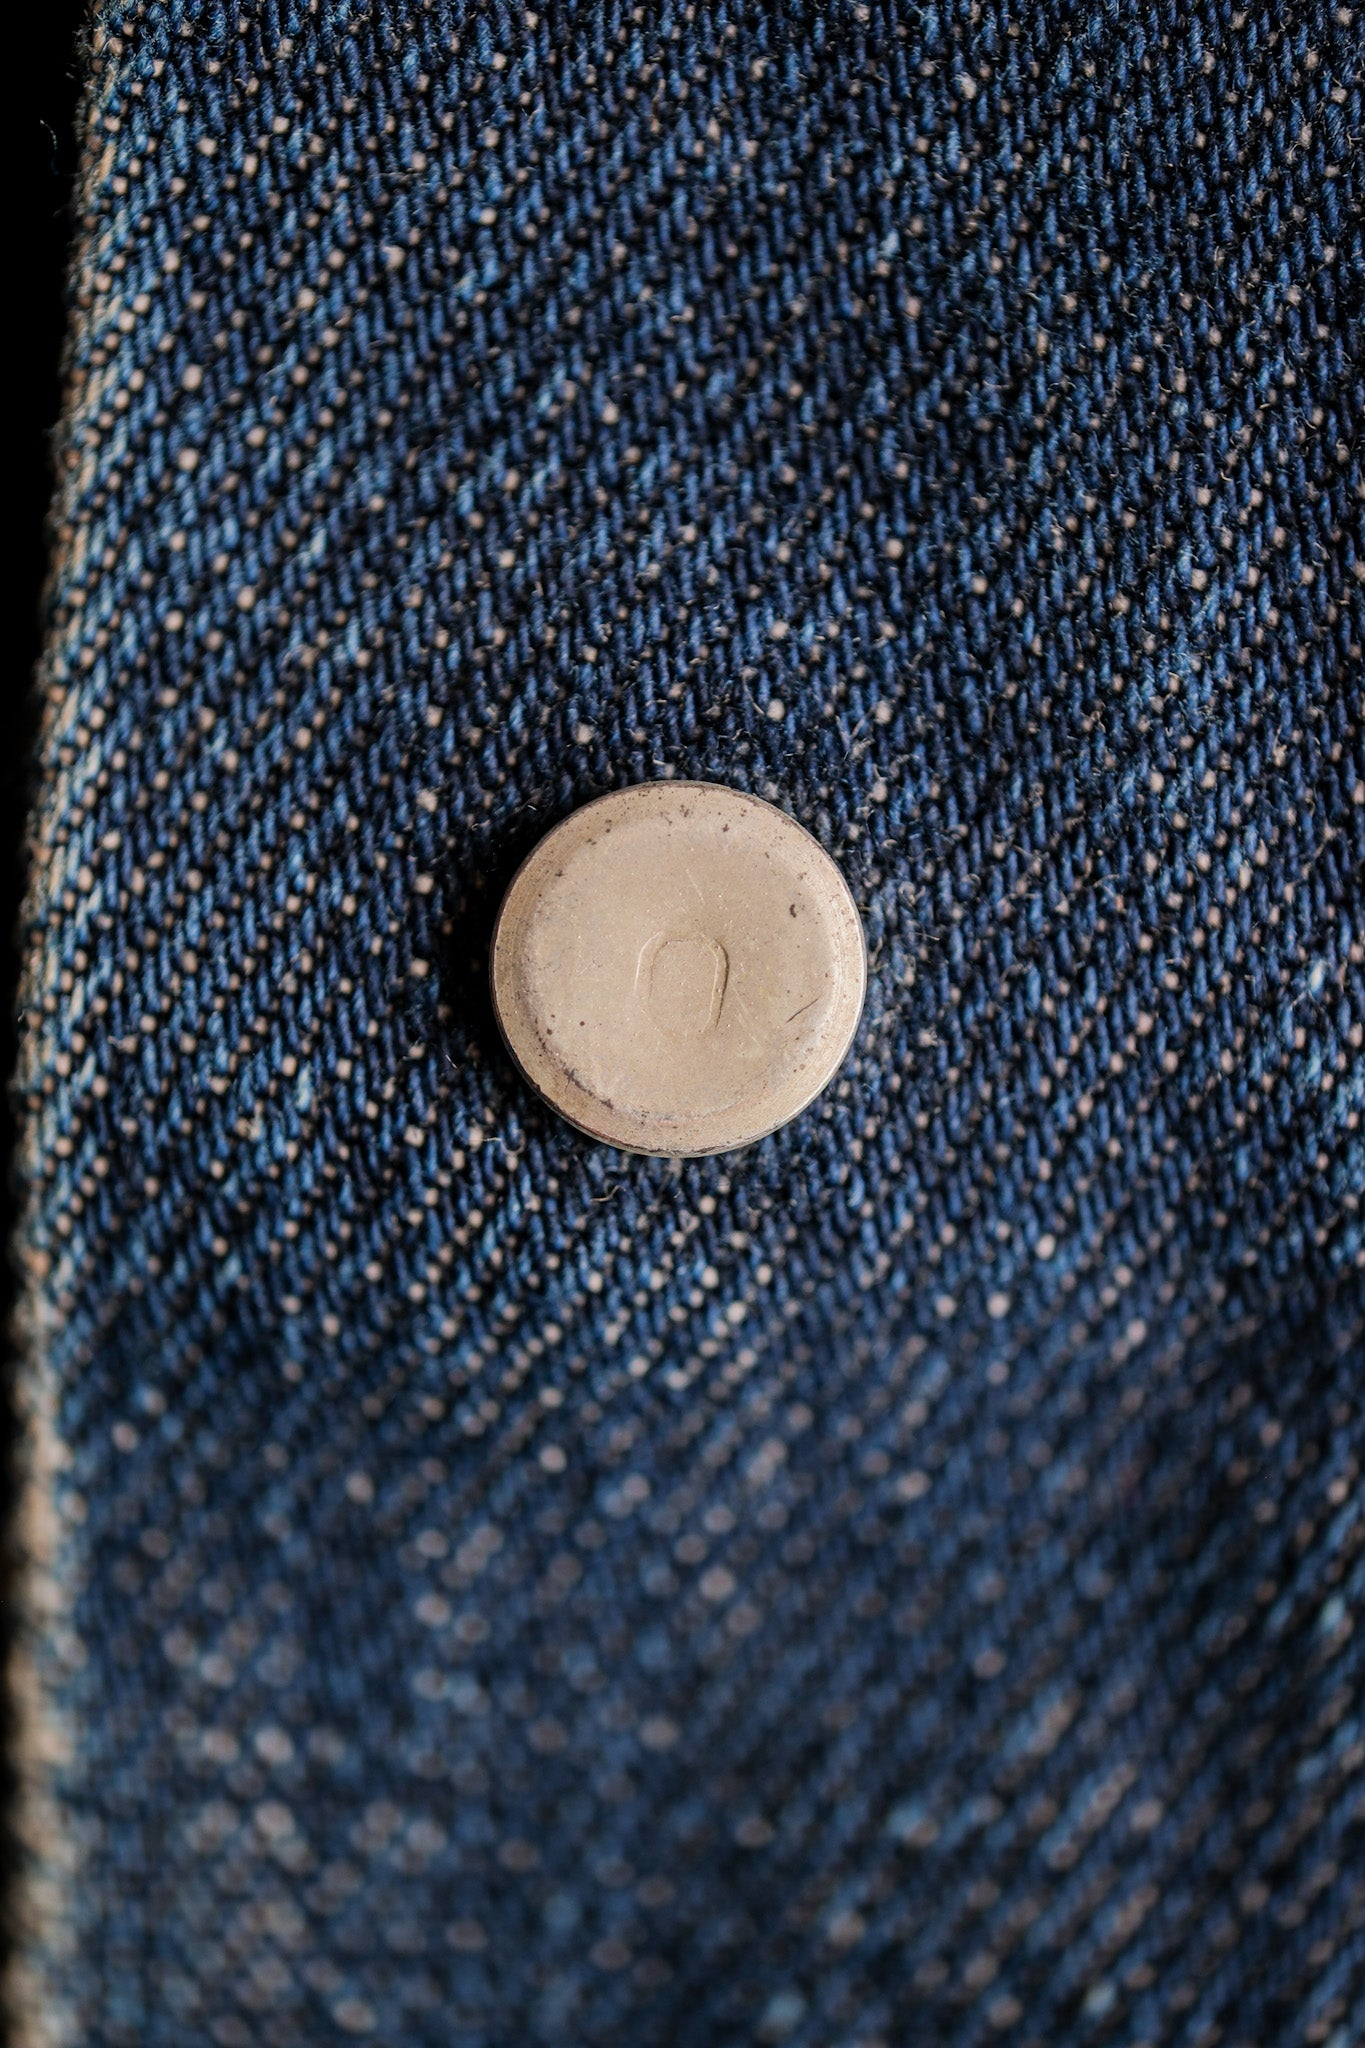 [~60's] Vintage Levi's 557 Denim Jacket "Big E"